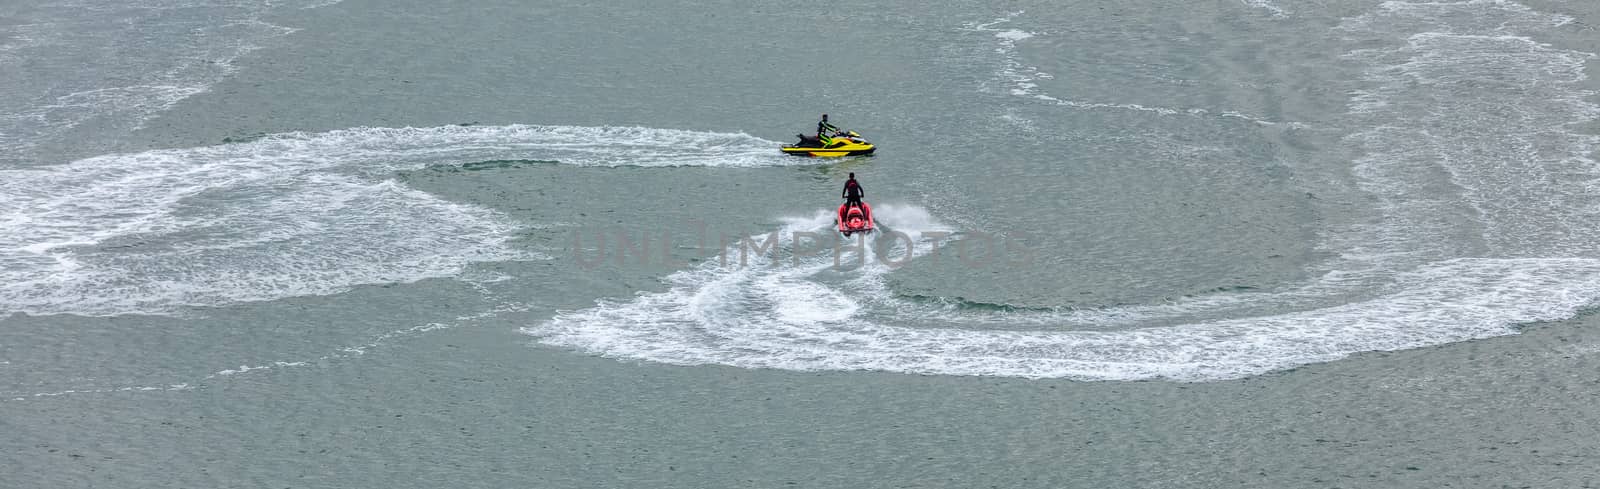 Red jetski moving towards a yellow jetski in the water by DamantisZ